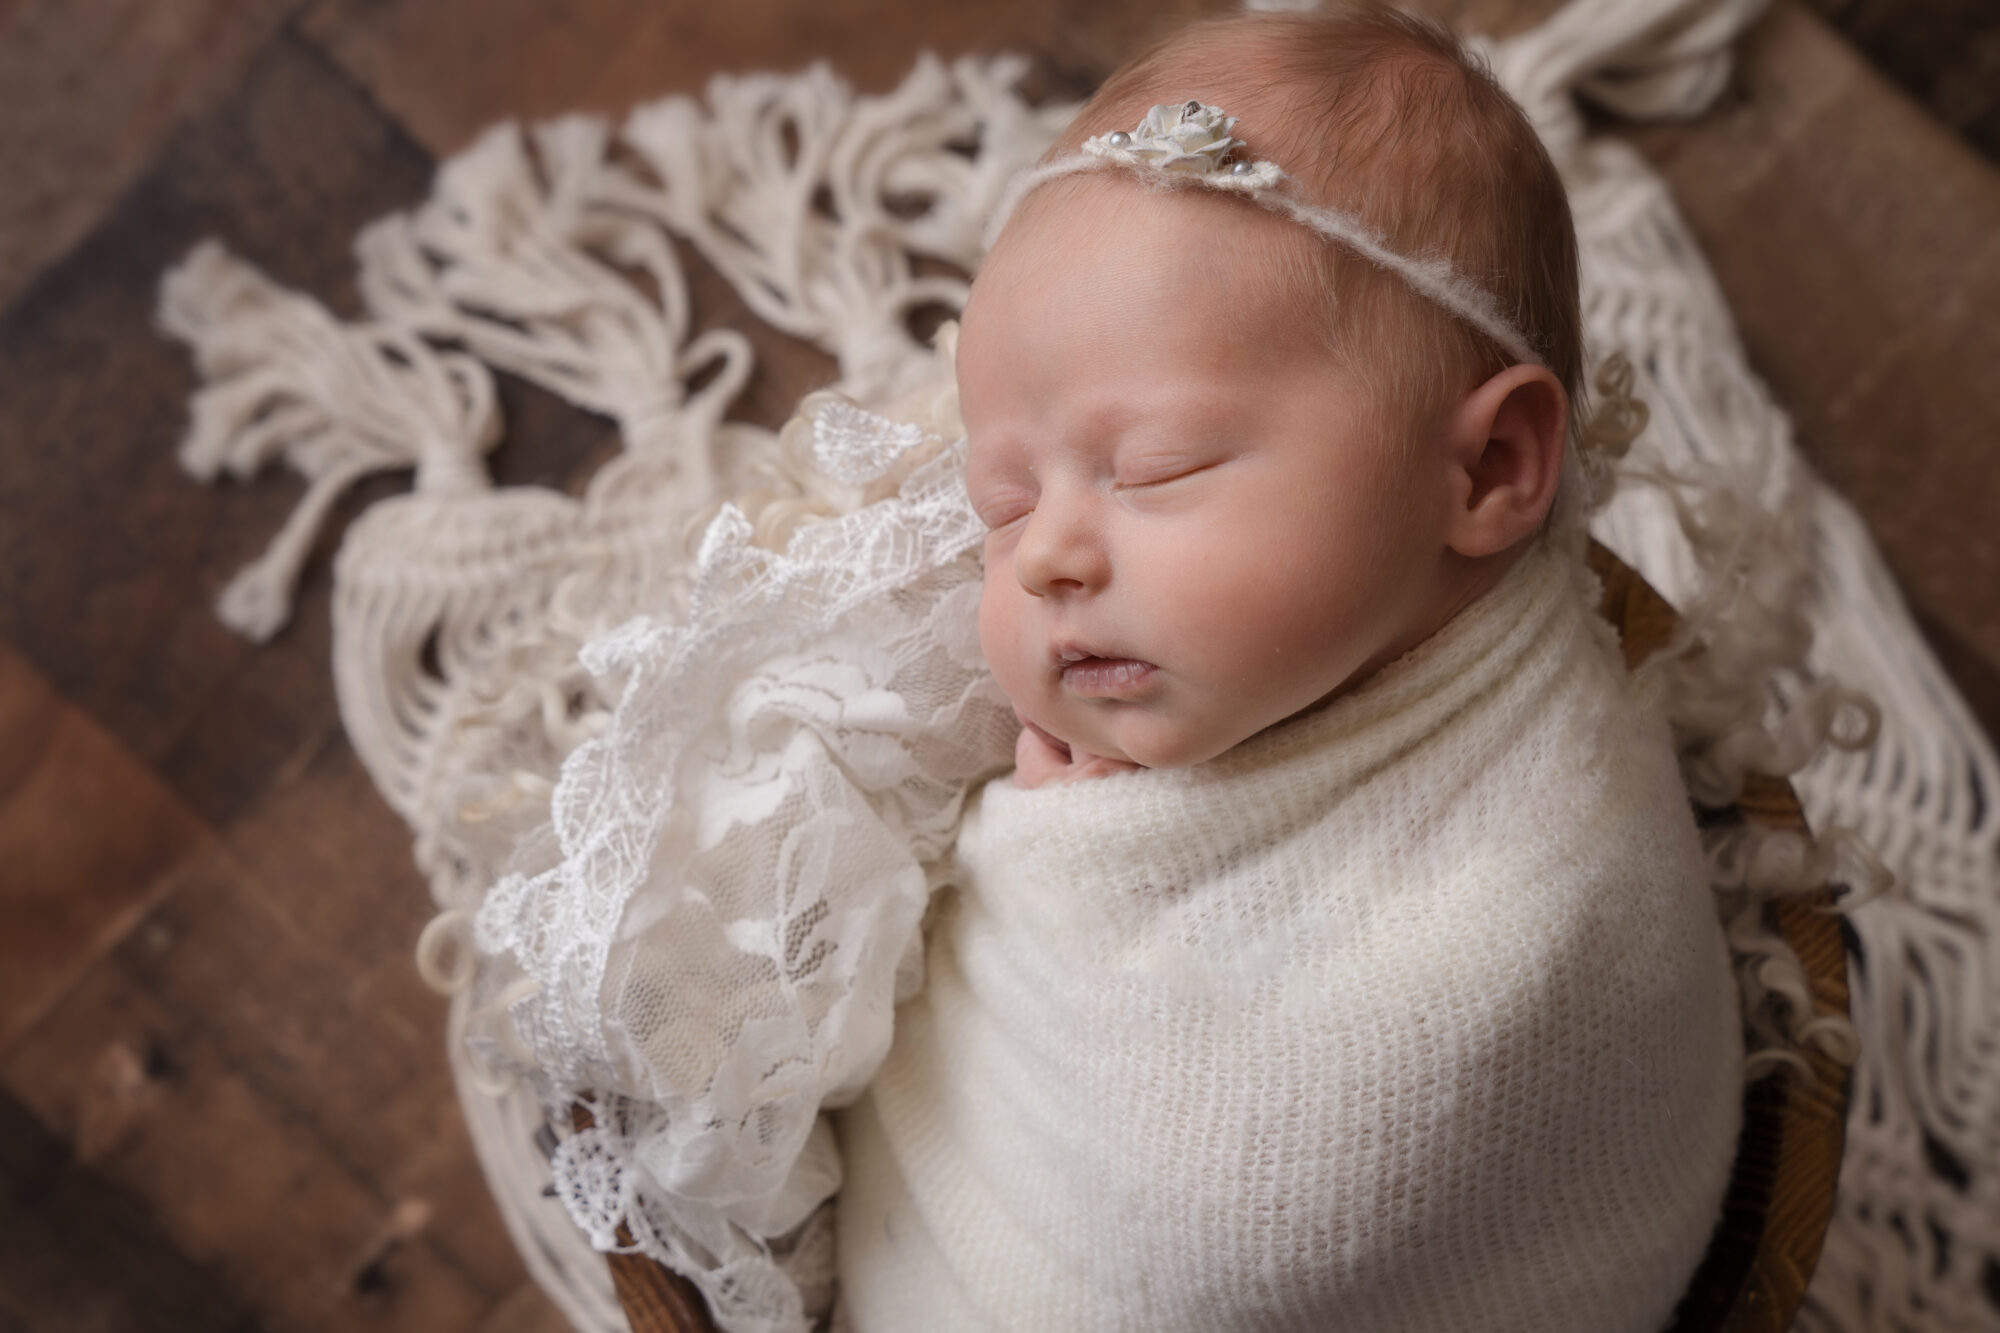 Babies on oxygen newborn photos